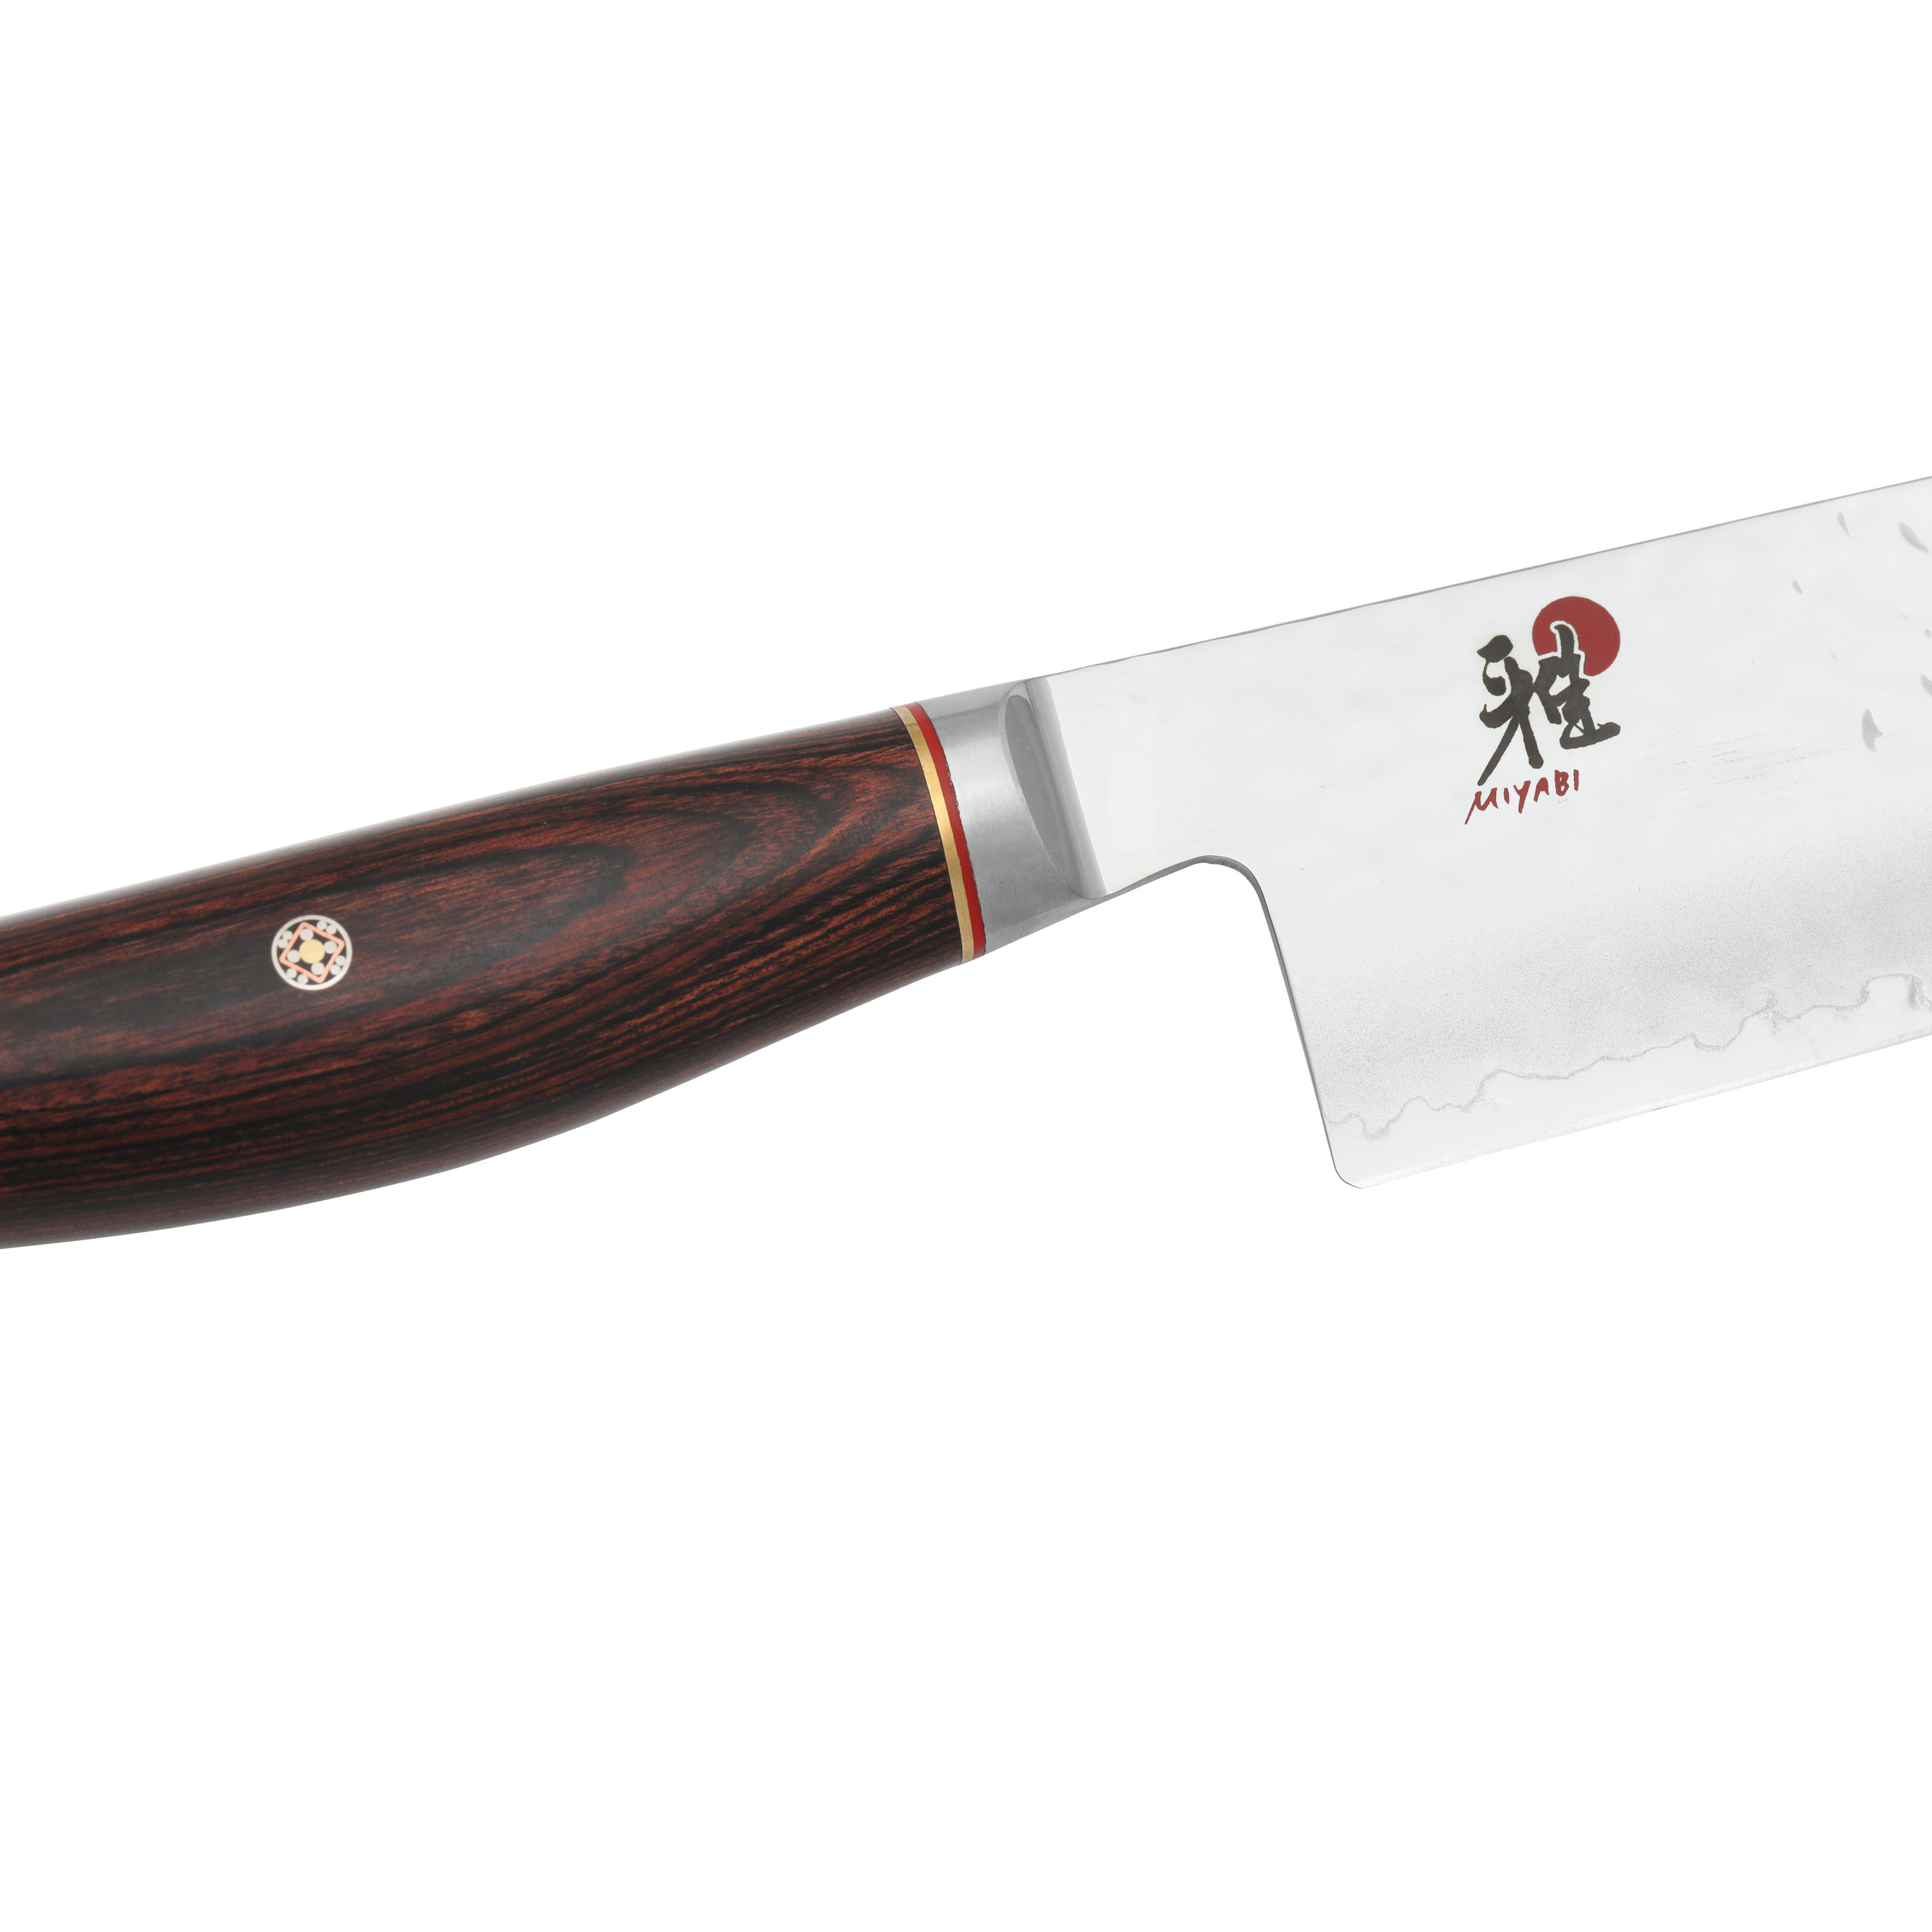 Miyabi Evolution Knives, 11 Options, Chef's, Paring, Santoku